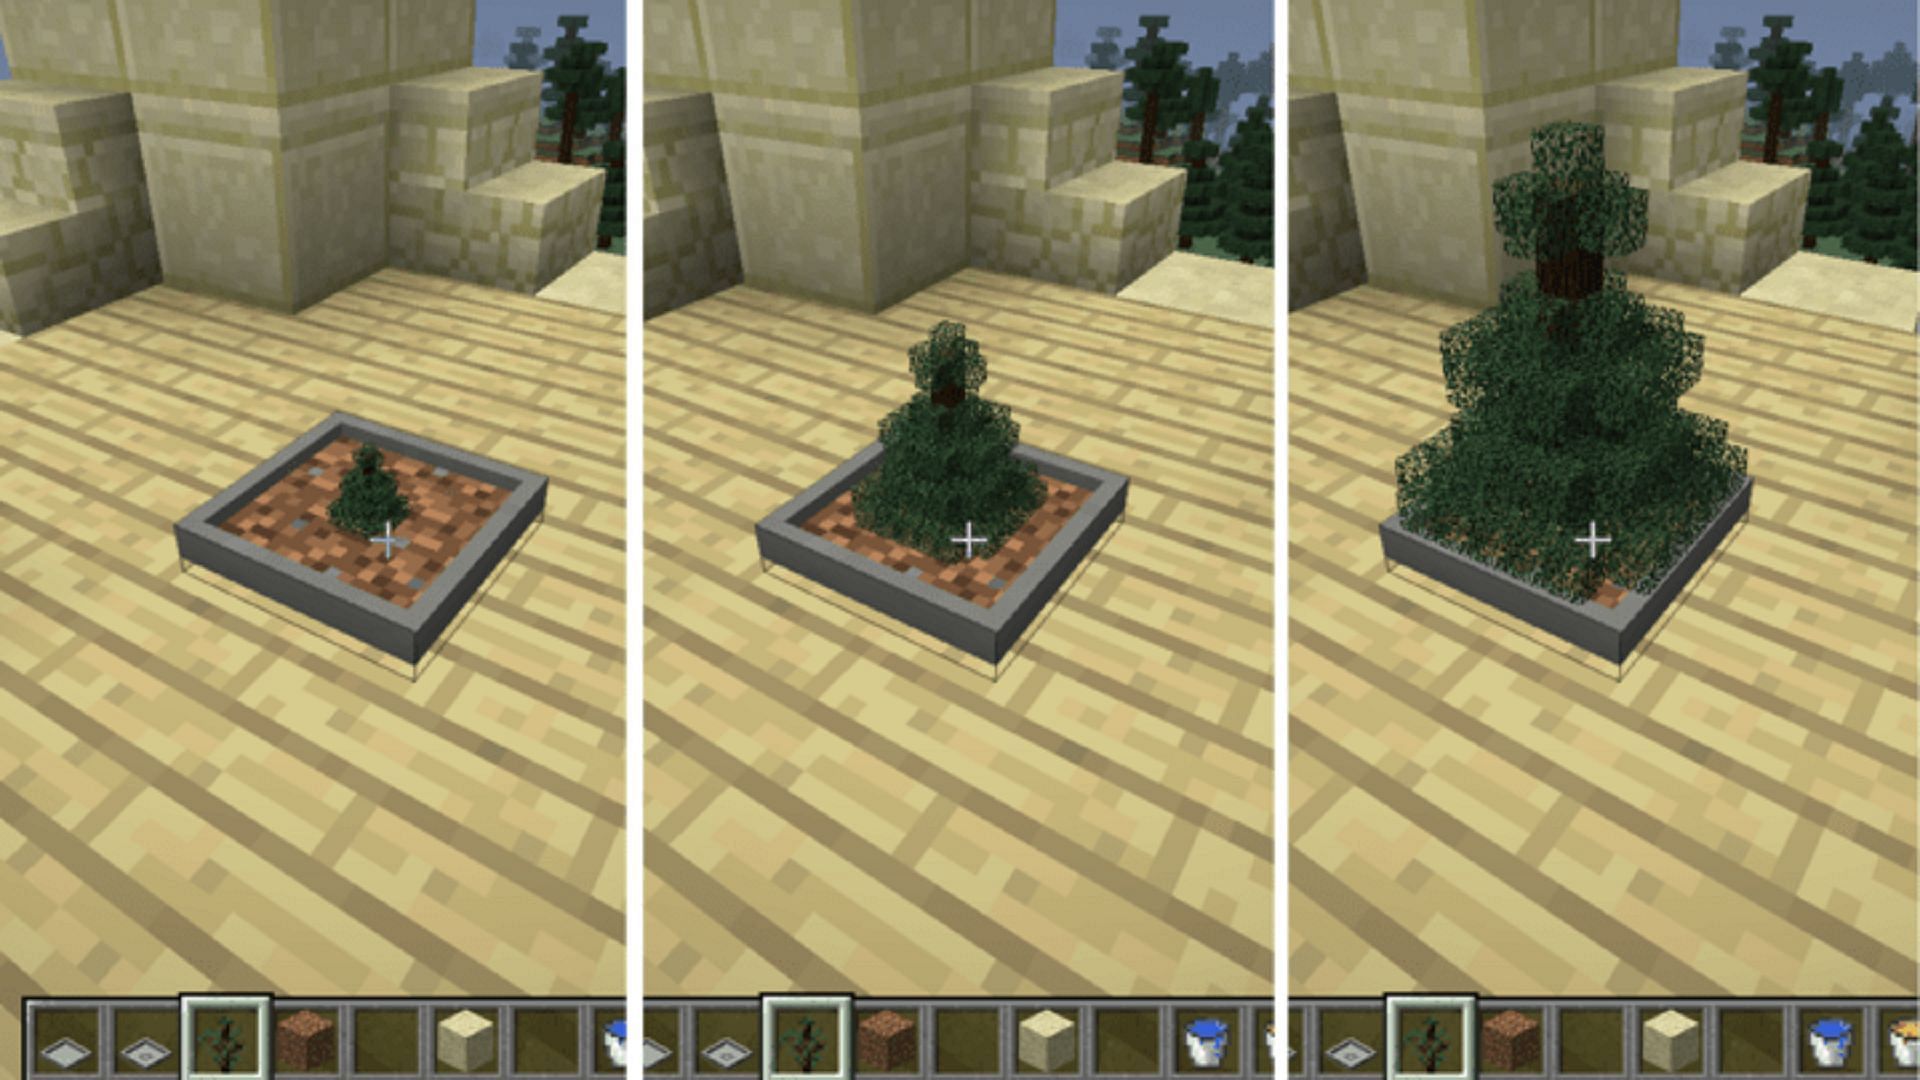 A Bonsai tree grows in its potting box via Bonsai Planters 3 (Image via Davenonymous/Minecraftmods.com)